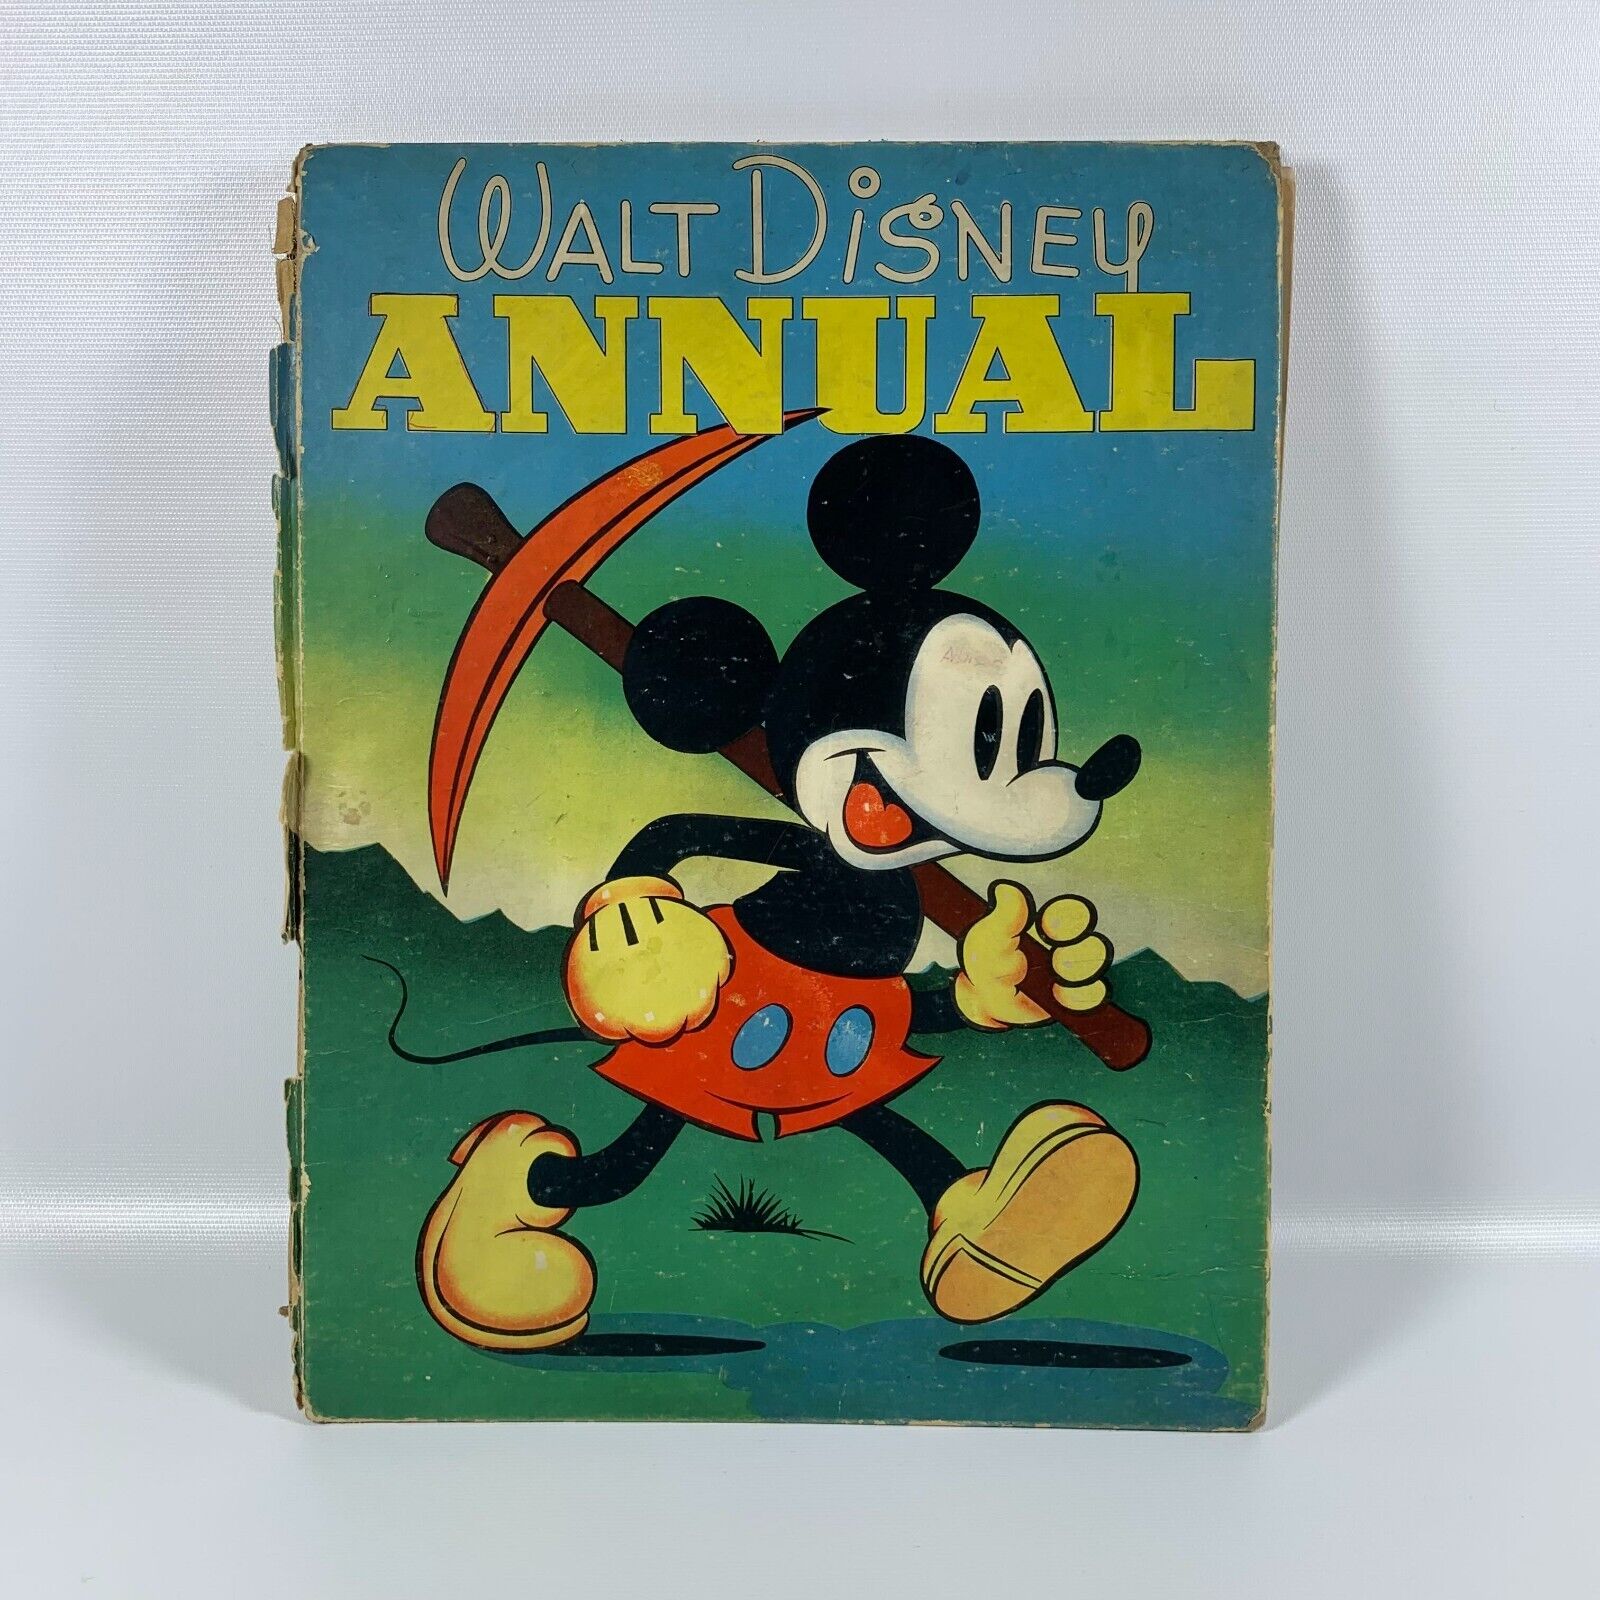 Vintage 1937 The Walt Disney Annual Childrens Hardcover Book Whitman Publishing